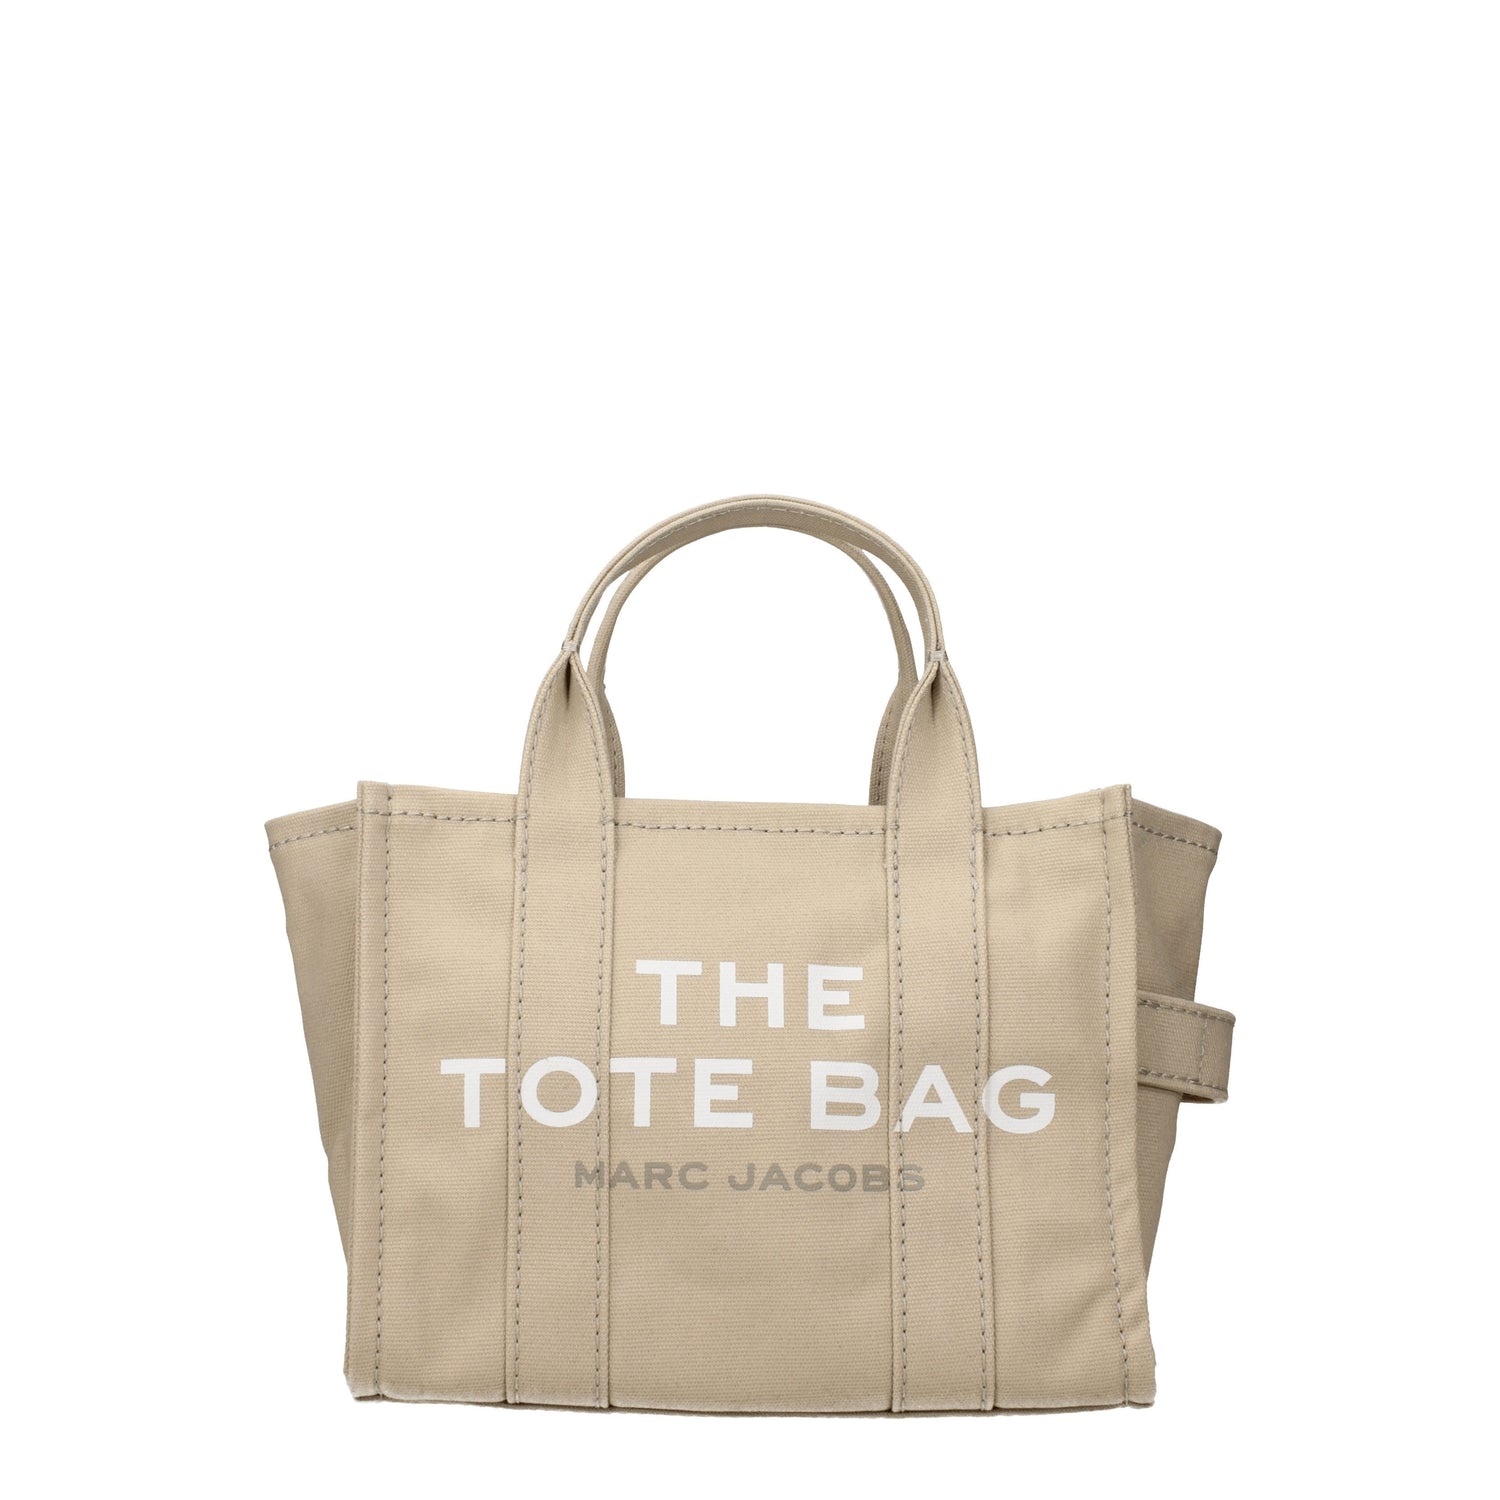 Marc Jacobs Borse a Mano the tote bag Donna Tessuto Beige Sabbia Chiaro